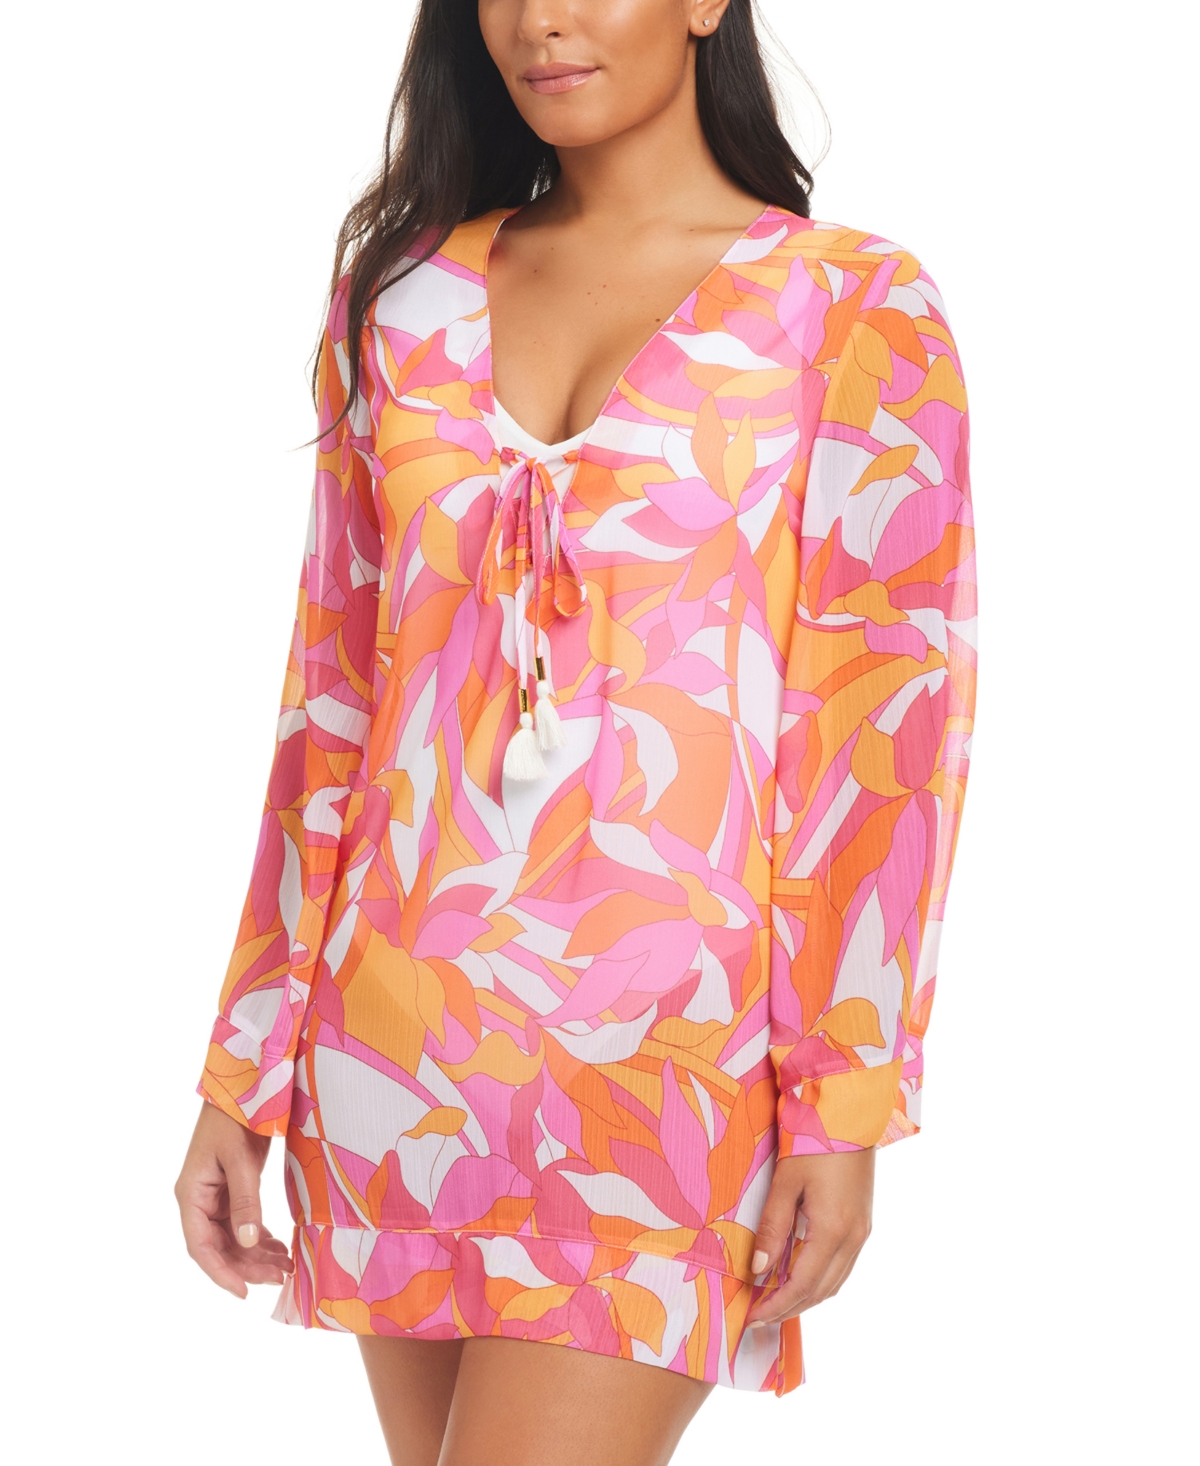 Women's Geometric-Print Cover-Up Dress - Pink Multi